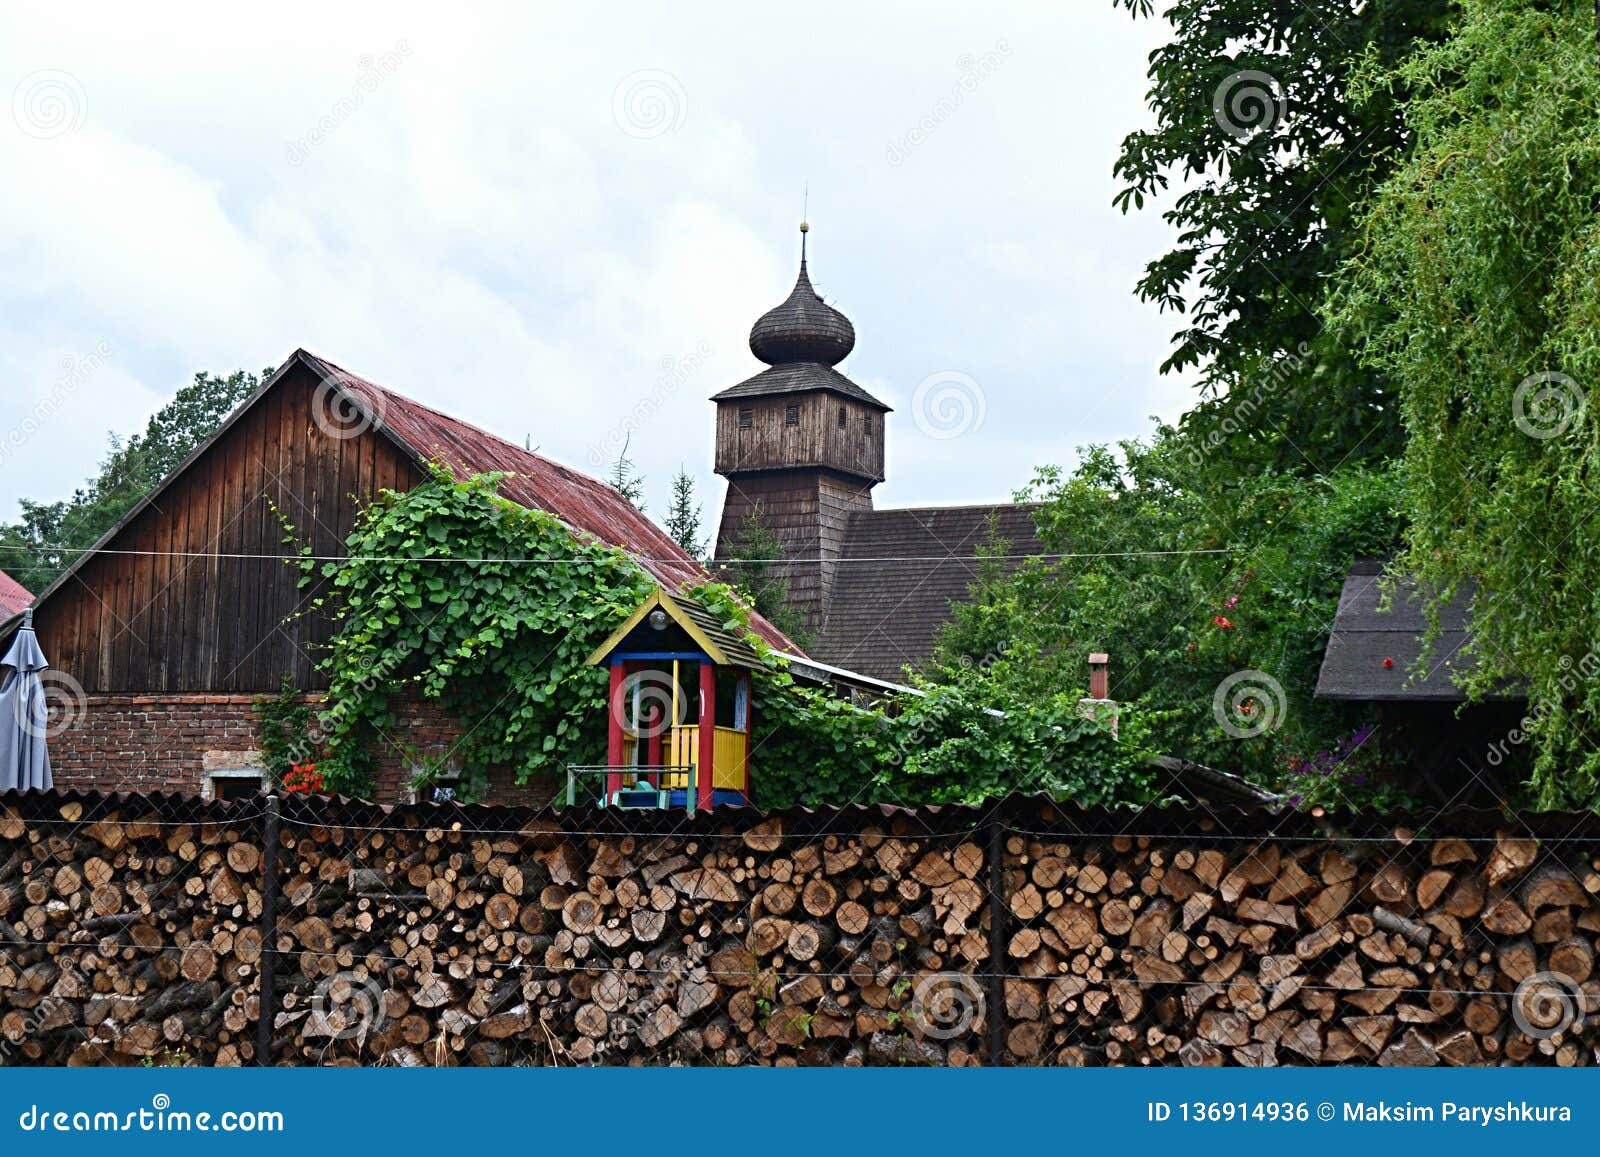 poland, wisla mala, catolic temple, wooden church, tourism, padre, religion